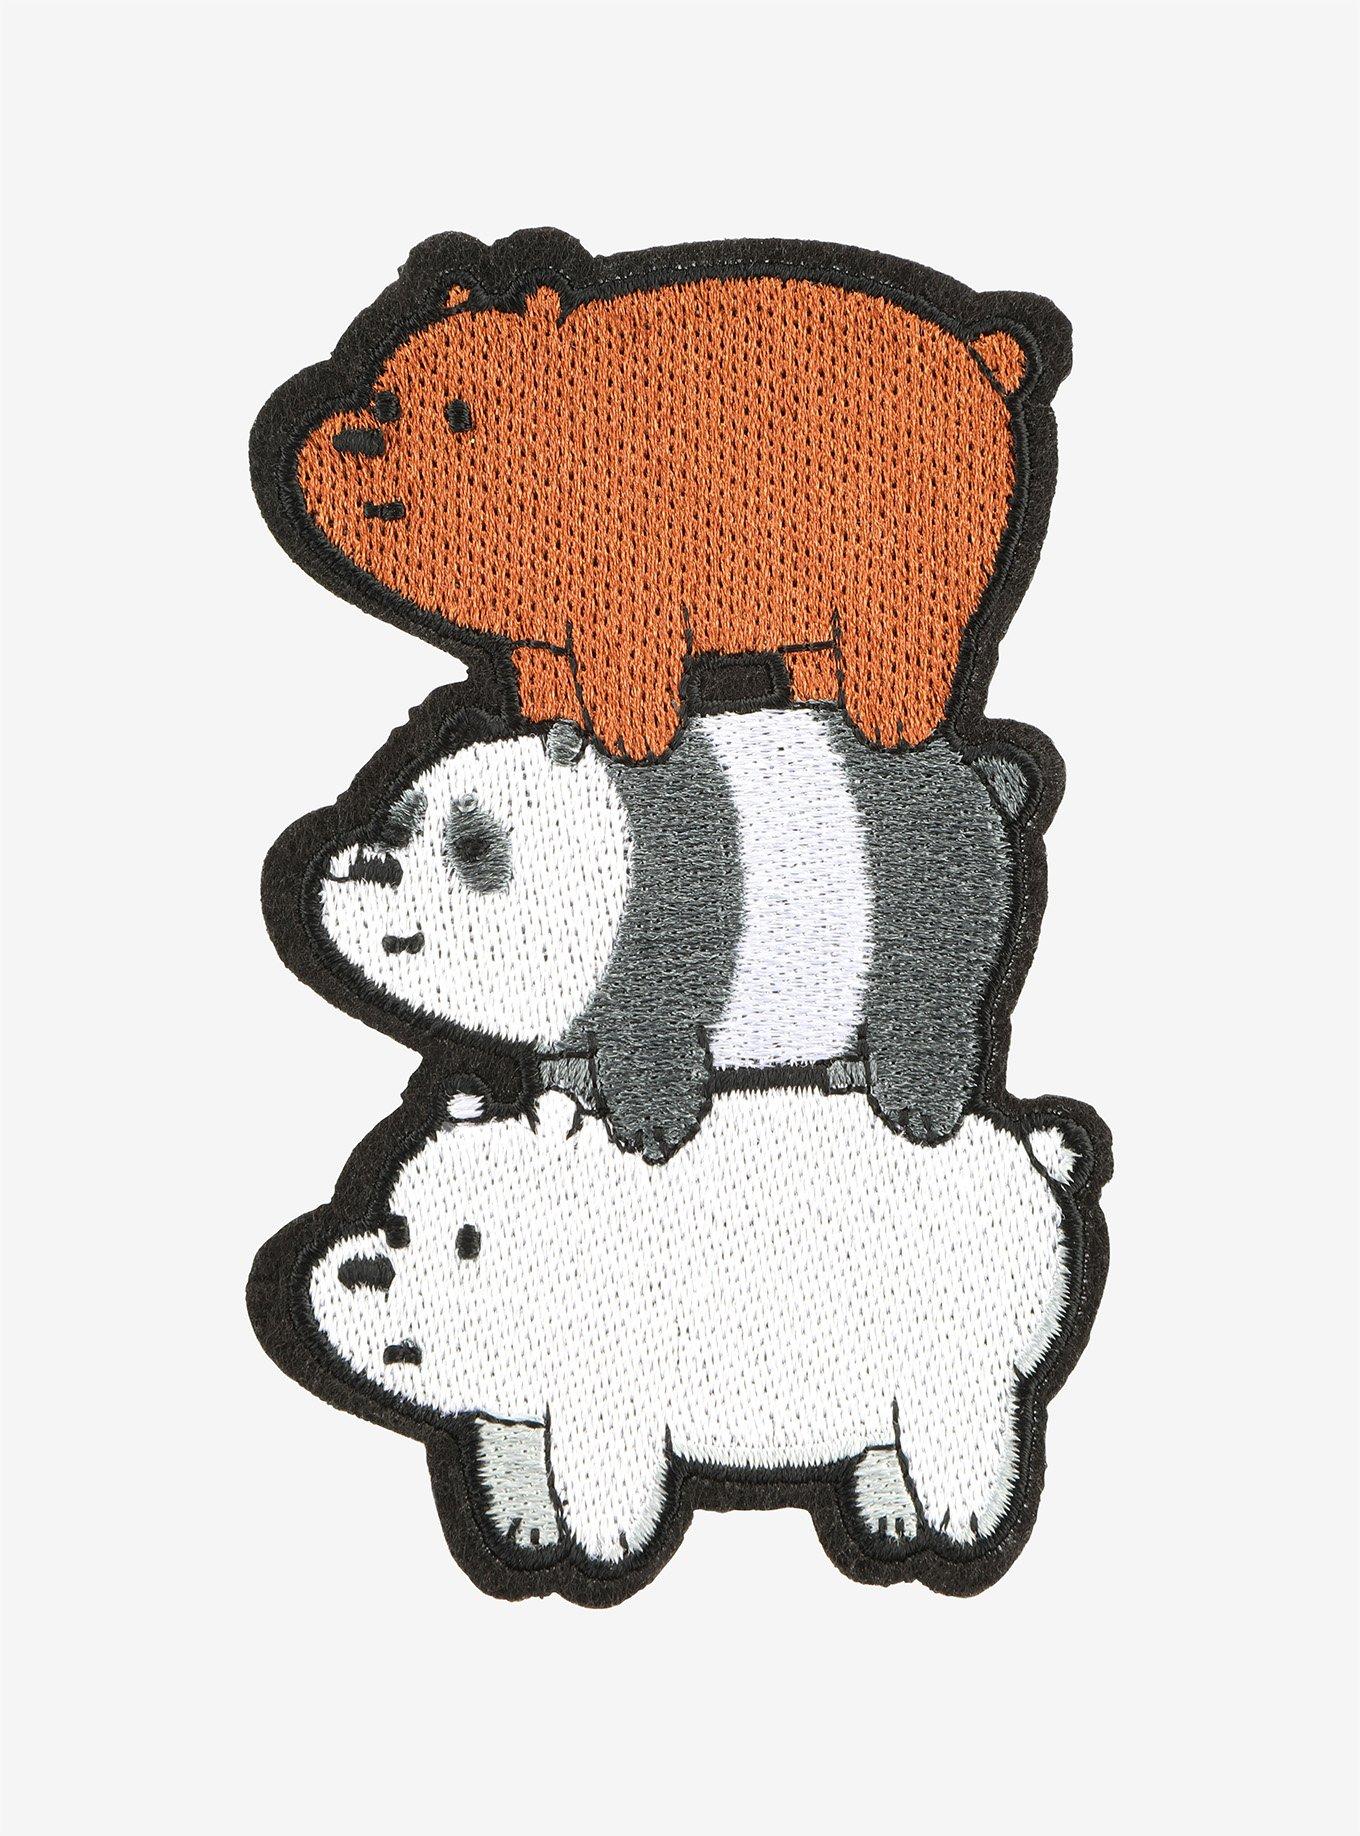 The Bears/Bear Stack, We Bare Bears Wiki